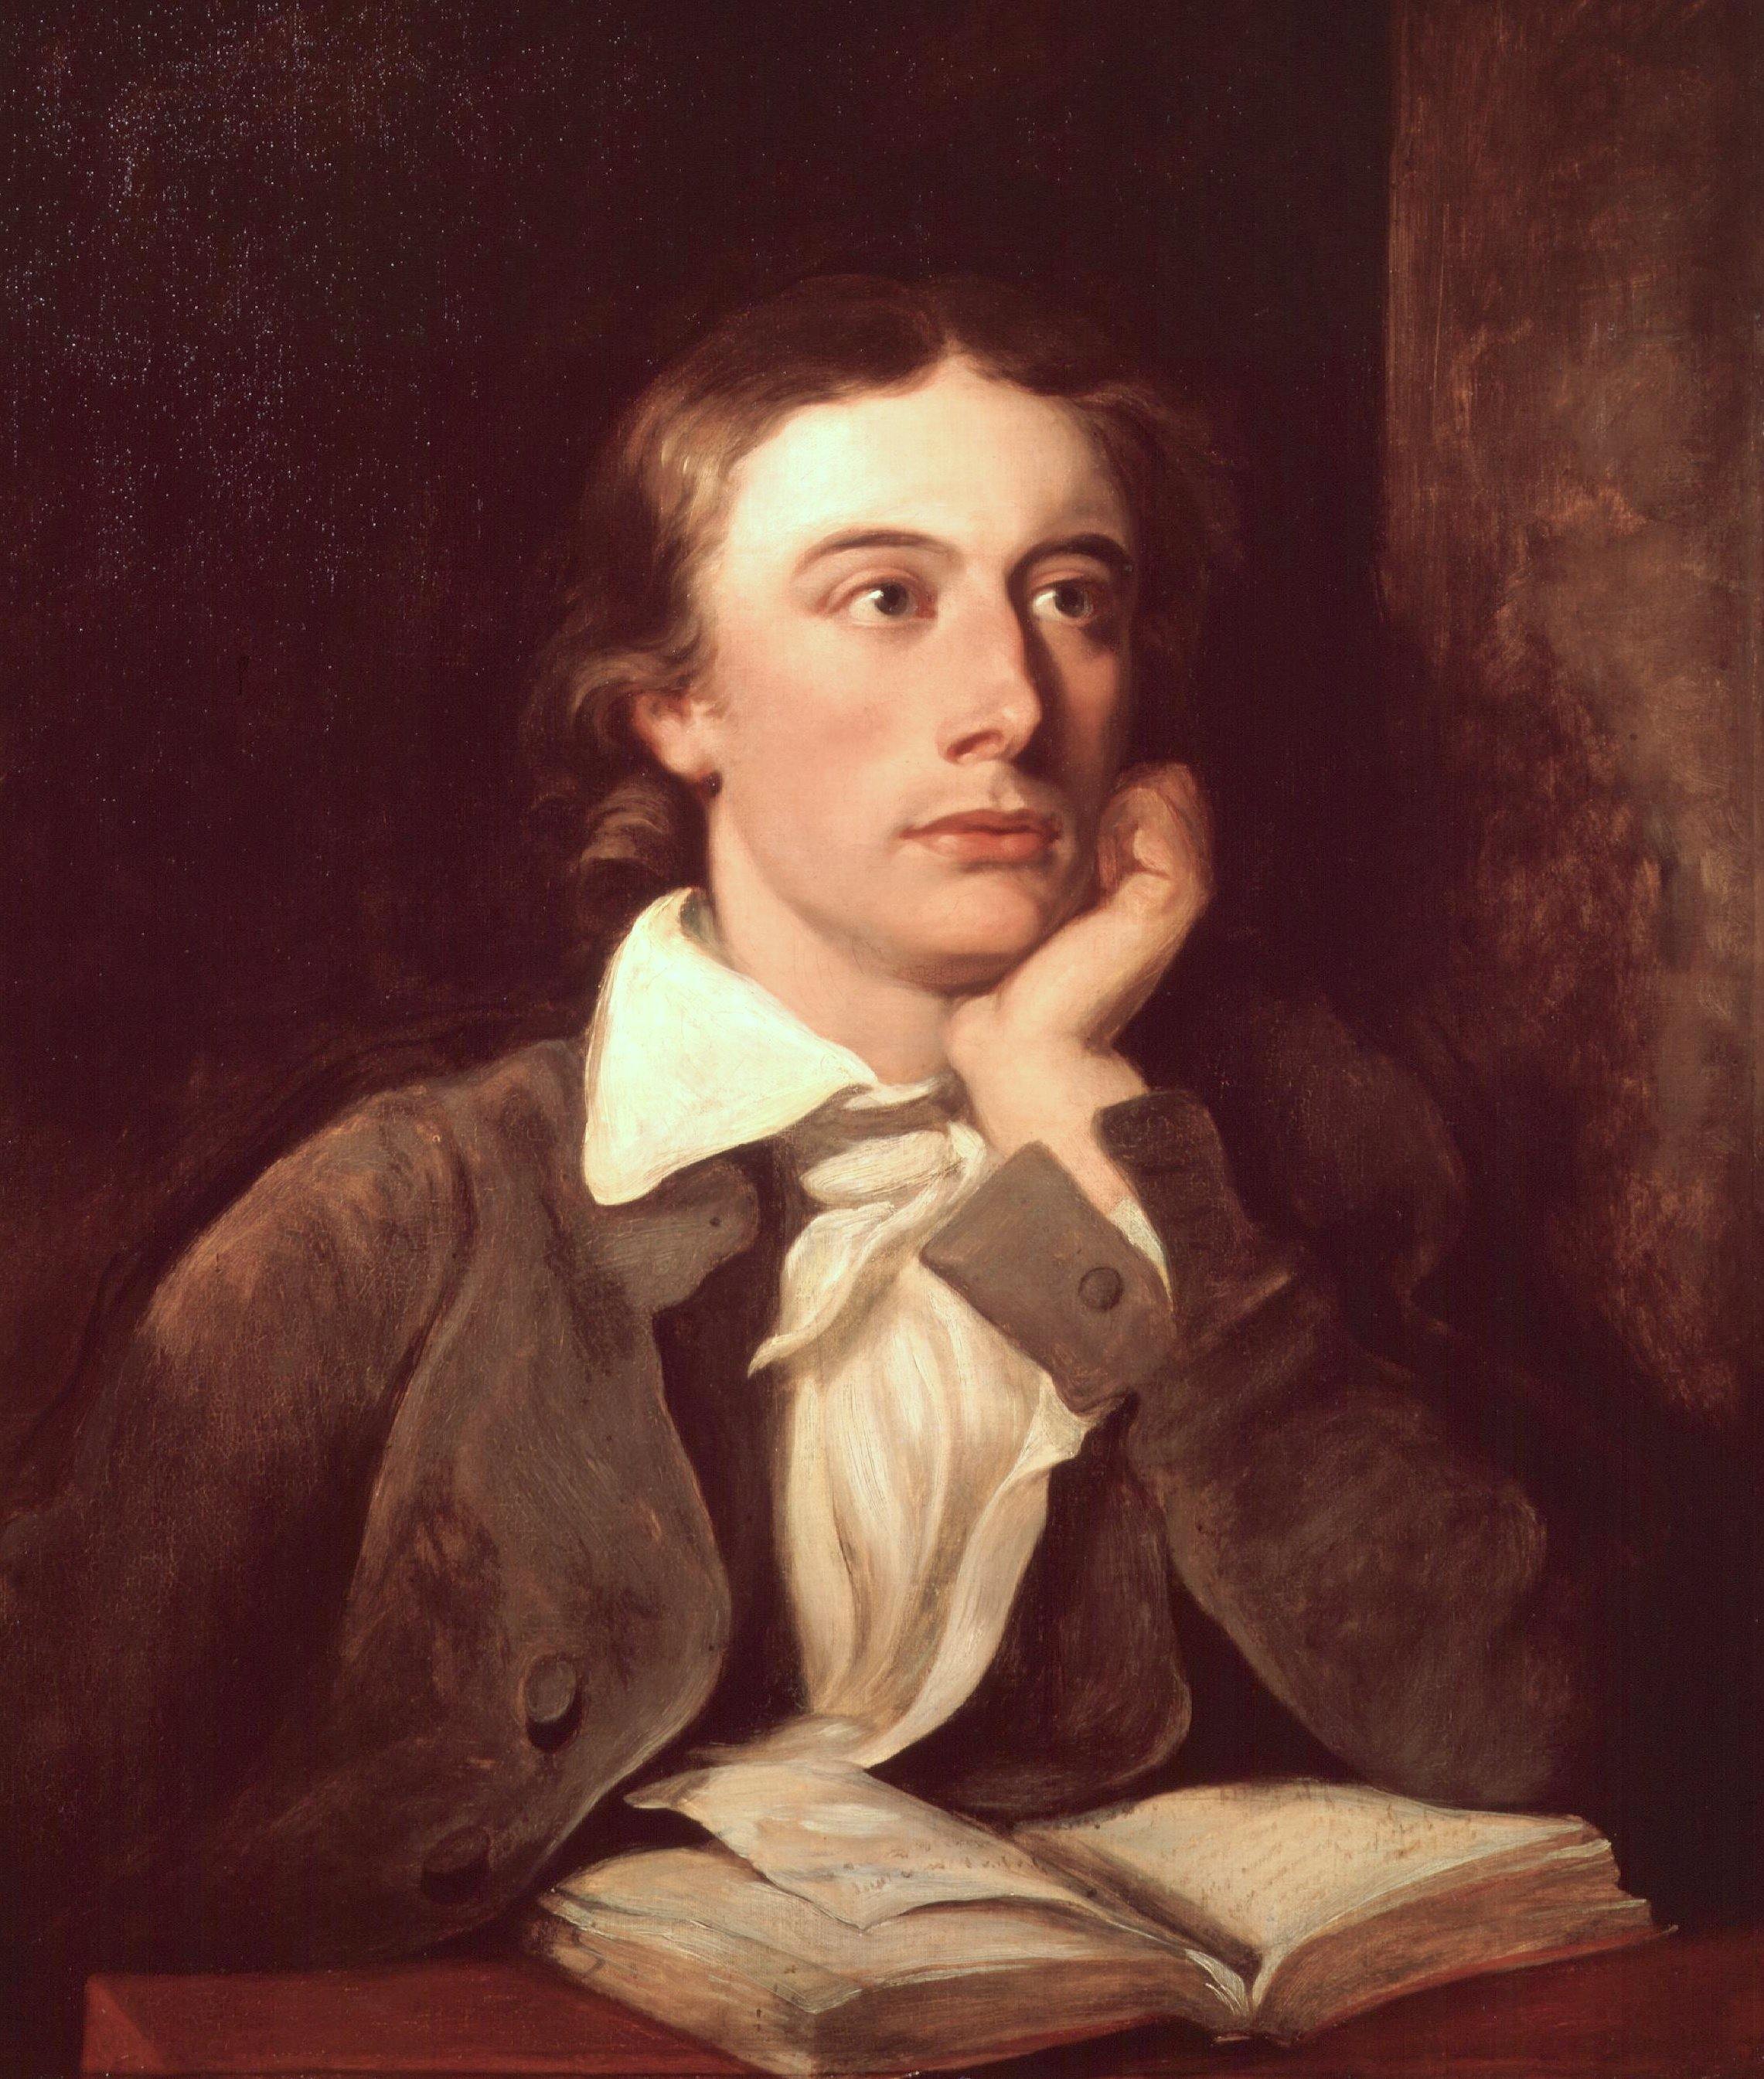 John Keats: An Austen Successor? - JaneAusten.co.uk